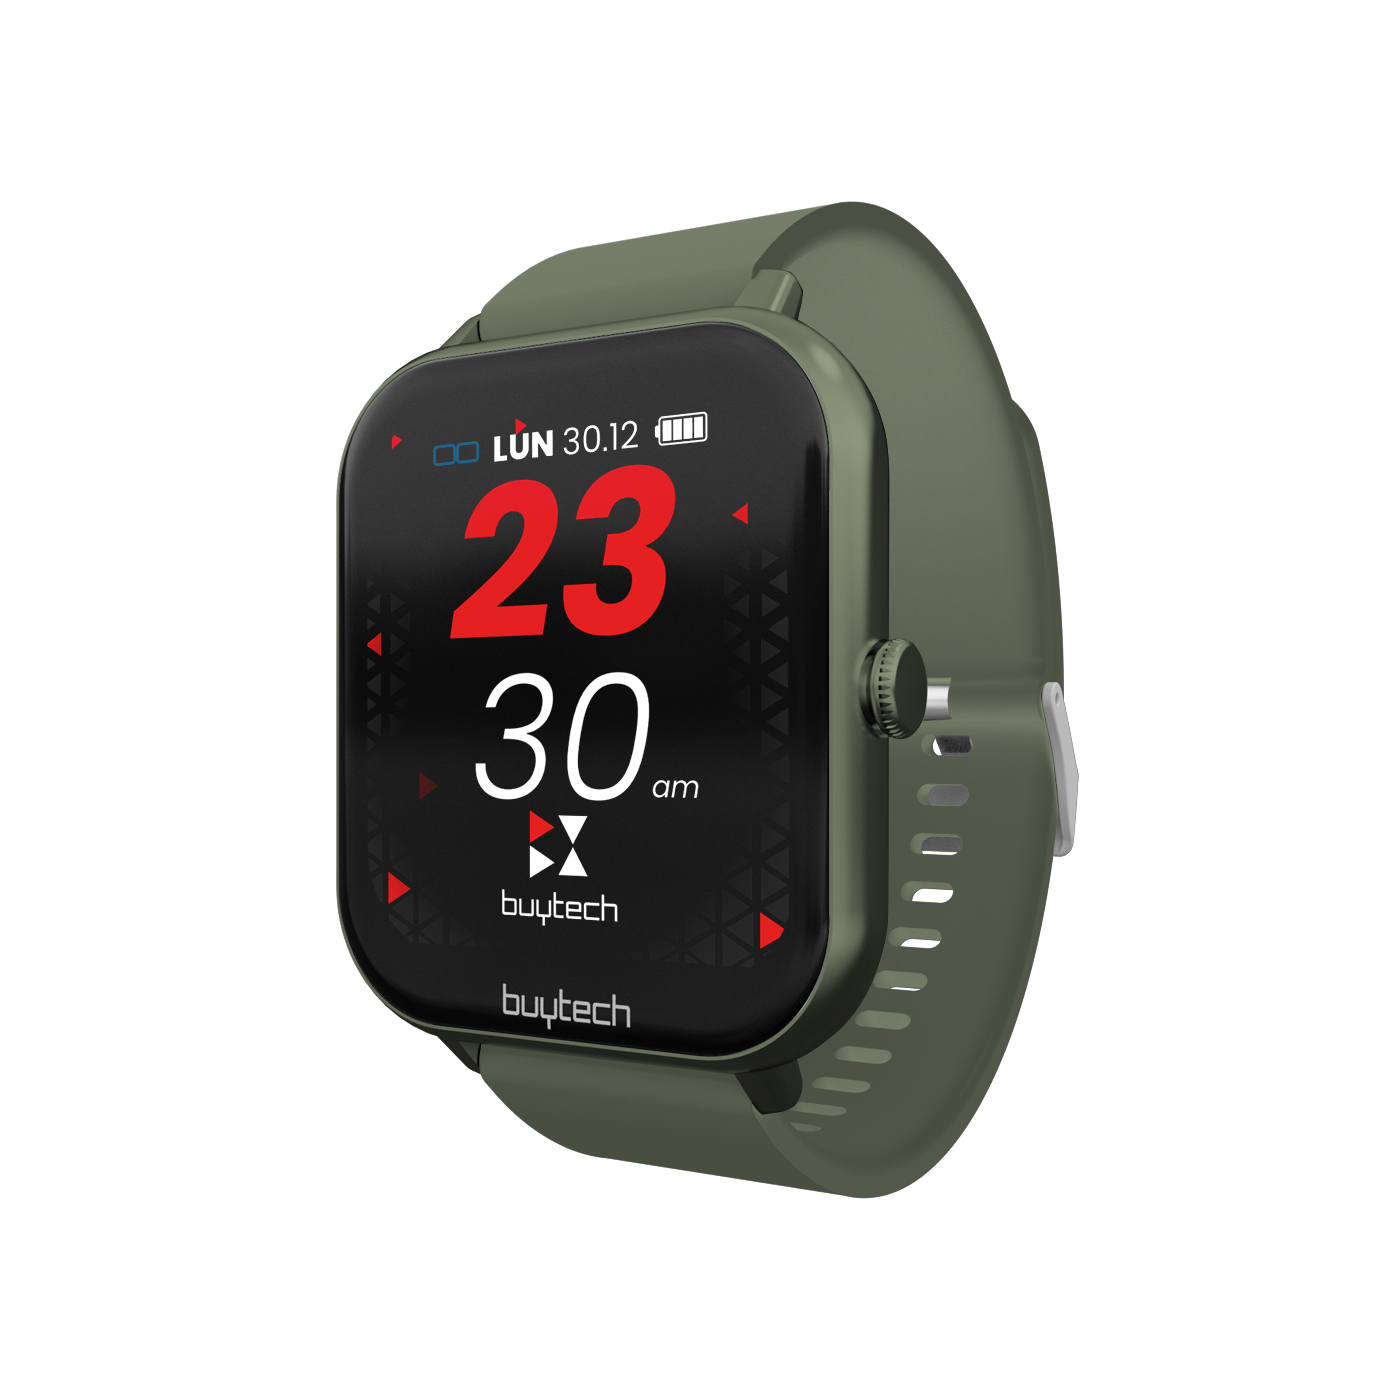 Buytech smartwatch cassa verde green cinturino in silicone BY-ALFA-GR